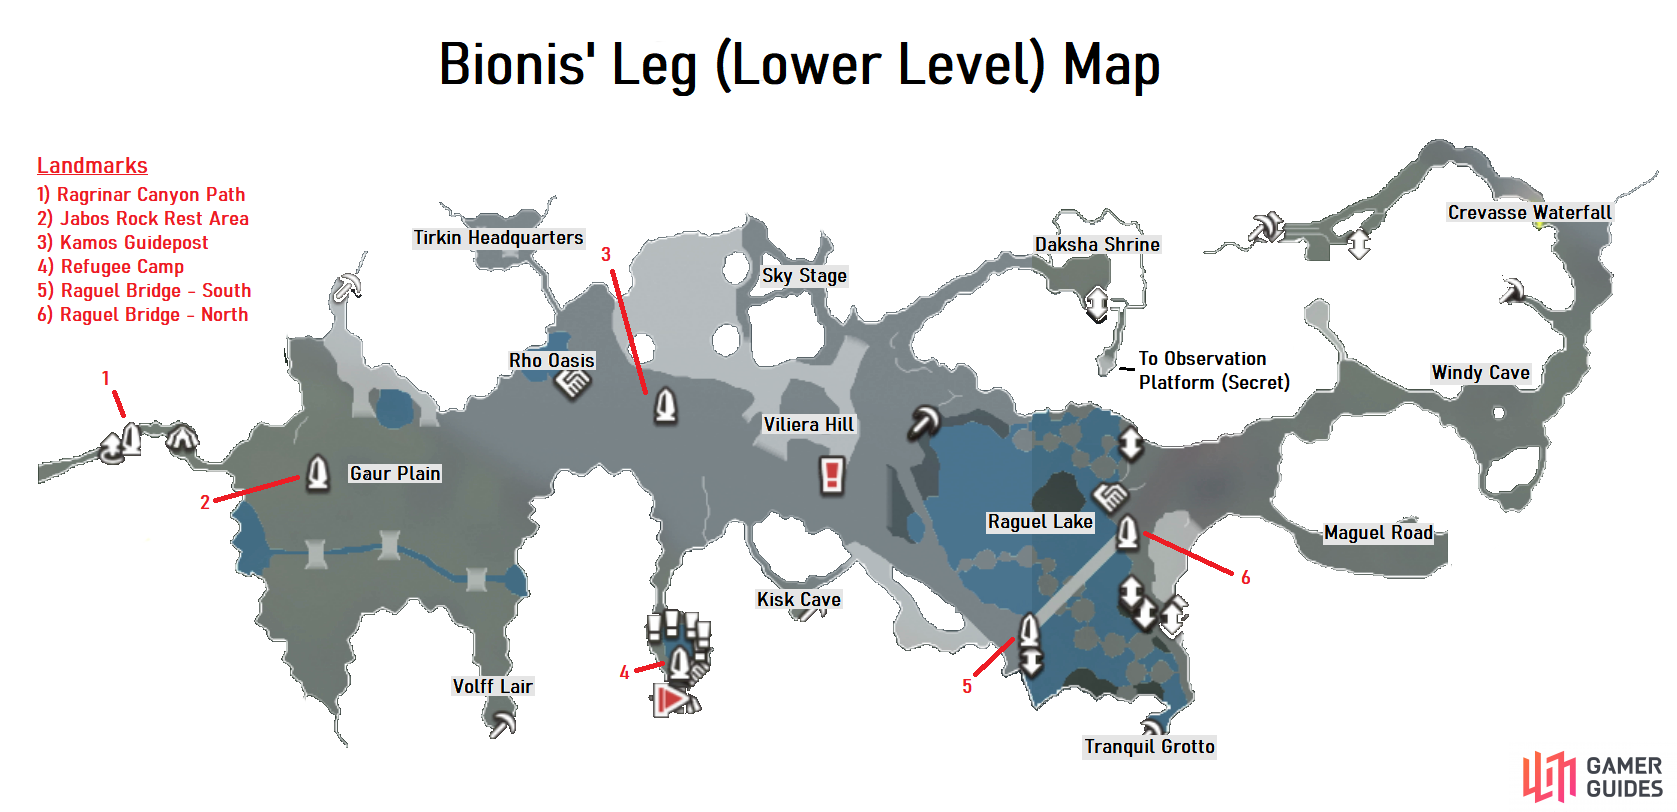 Lower Level Map for Bionis' Leg